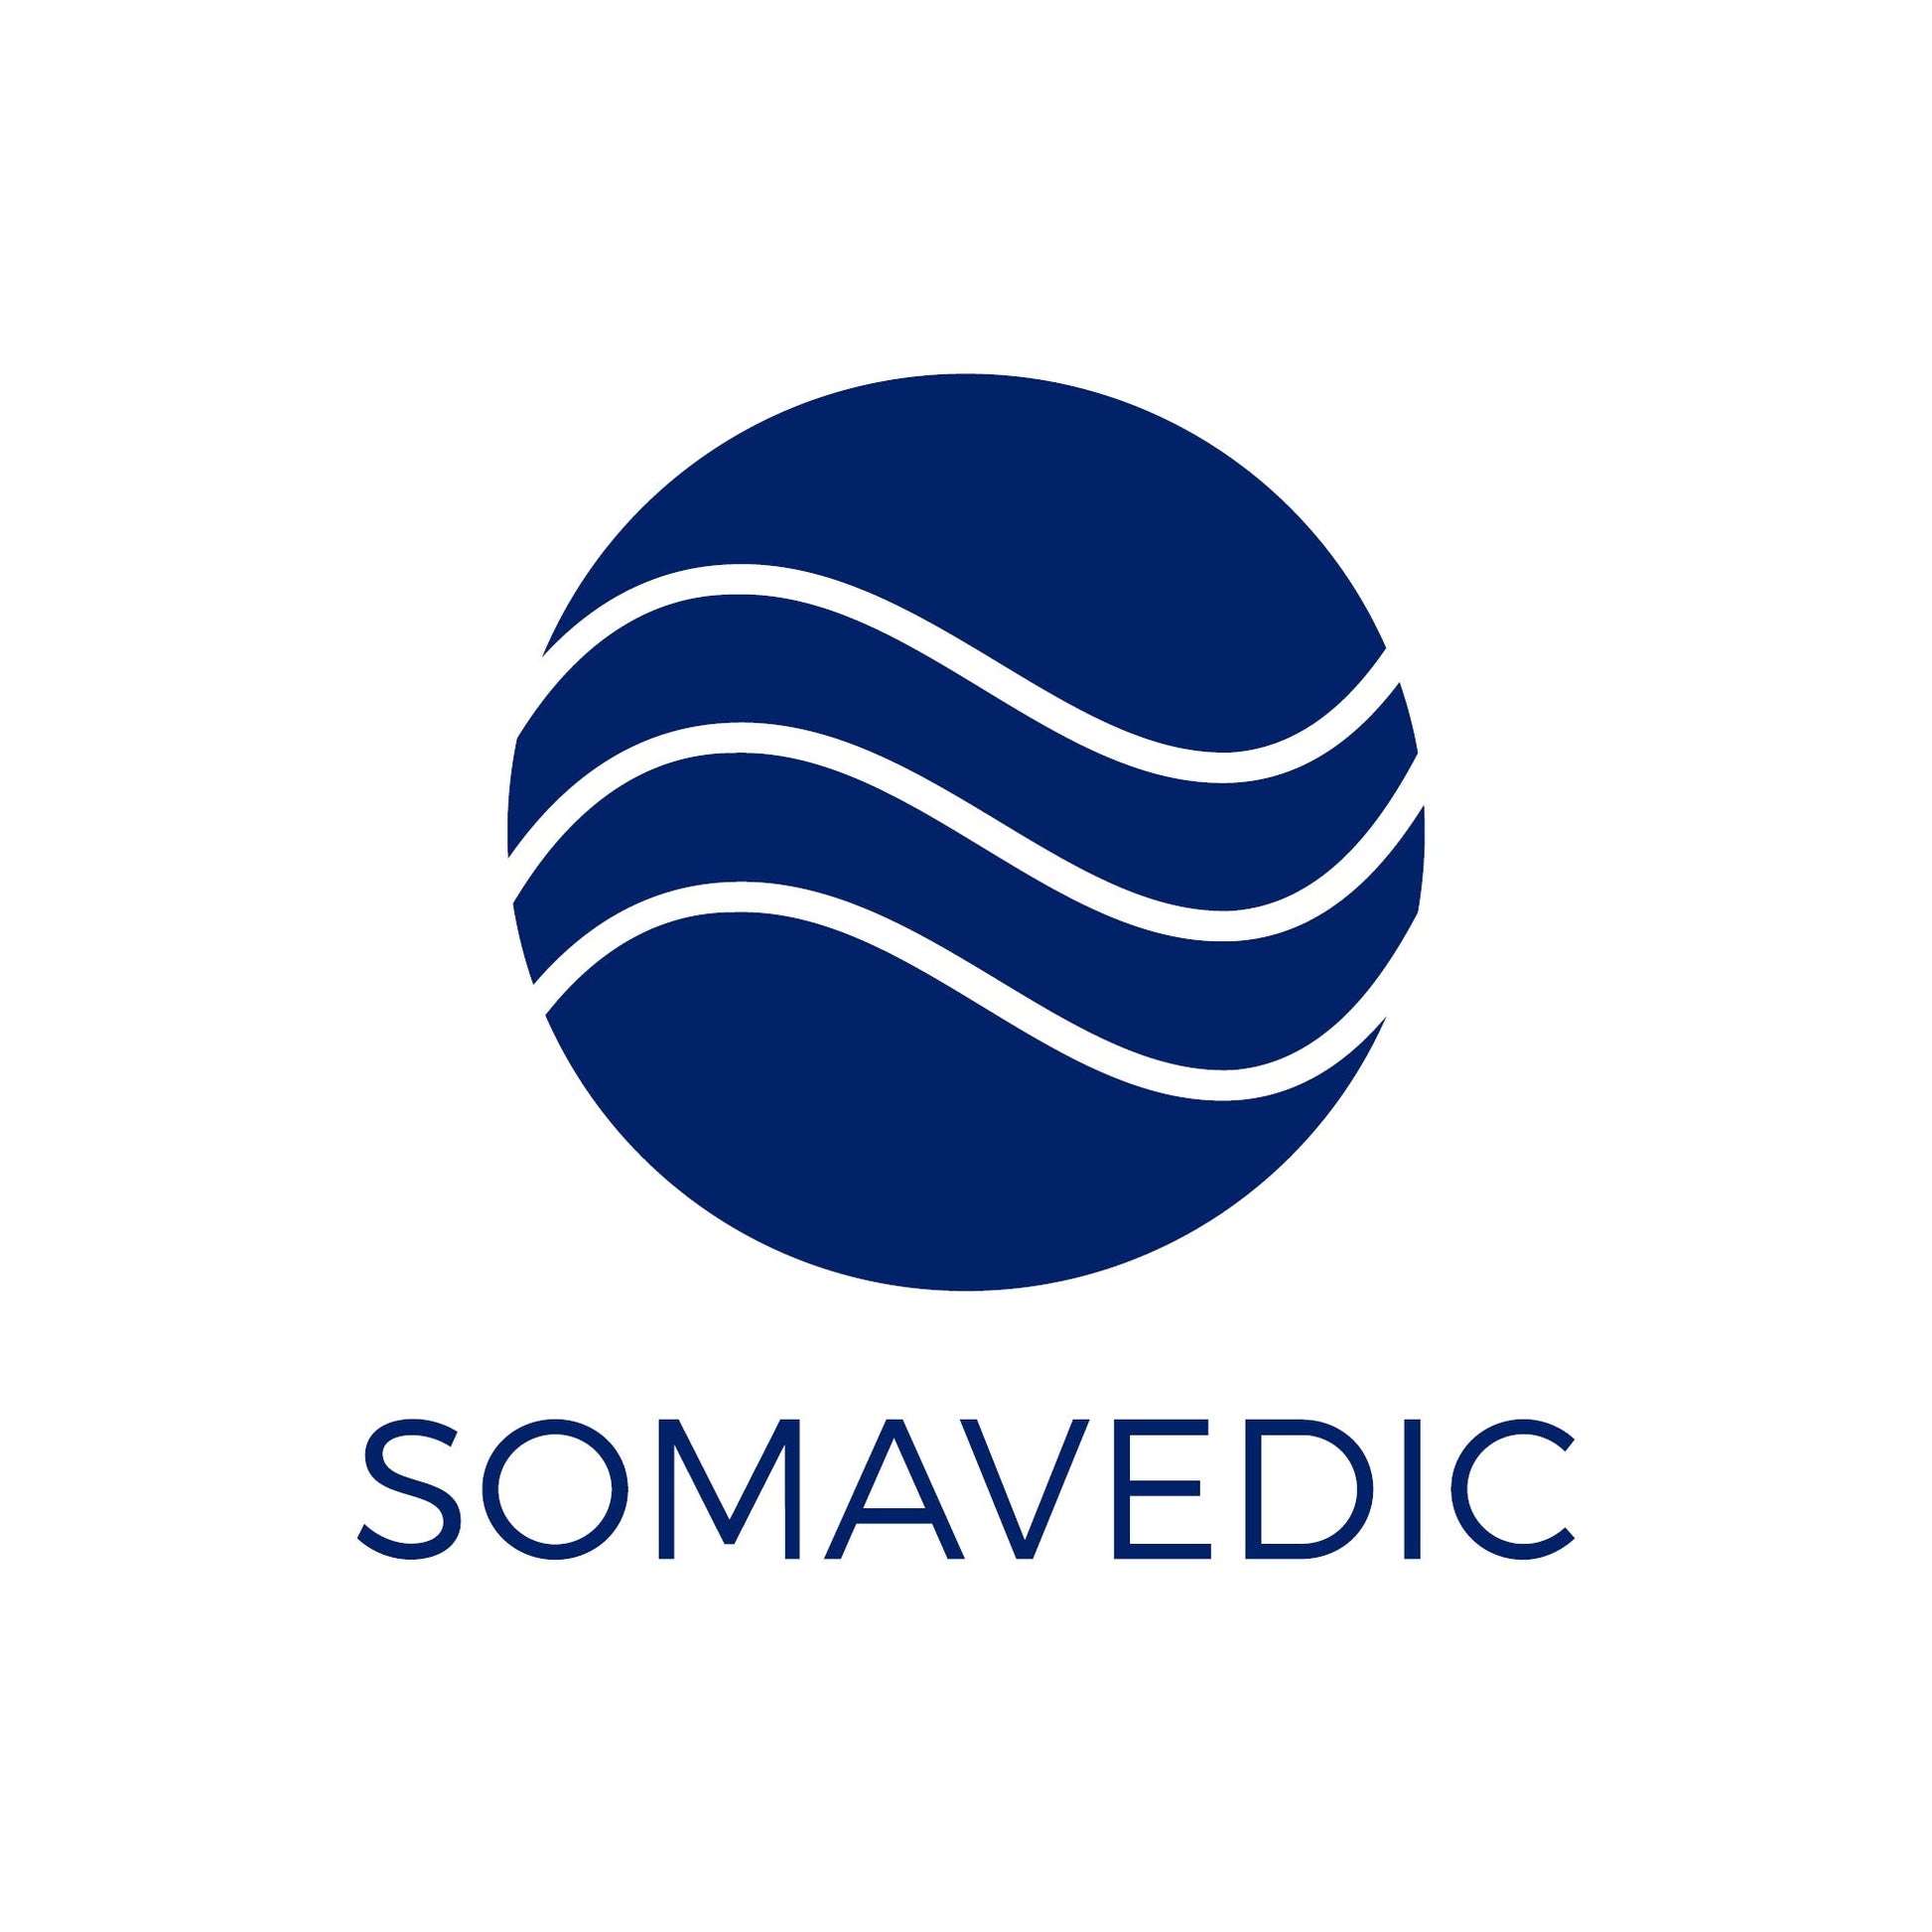 Somavedic - Your Soul Purpose